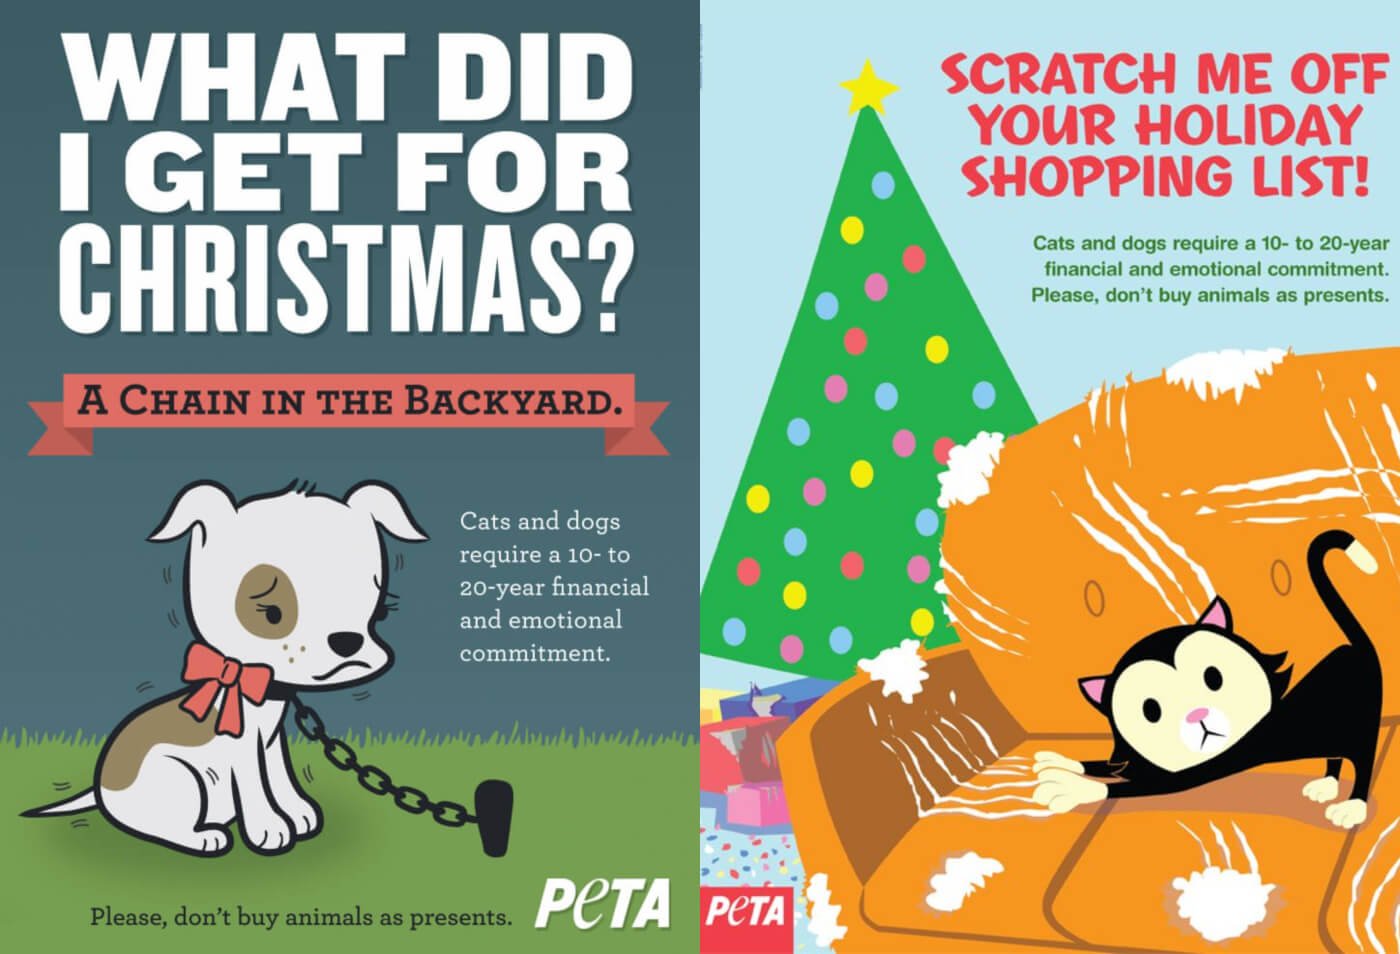 https://www.peta.org/wp-content/uploads/2014/12/peta-holiday-adopt-dont-shop-ads-2018.jpg